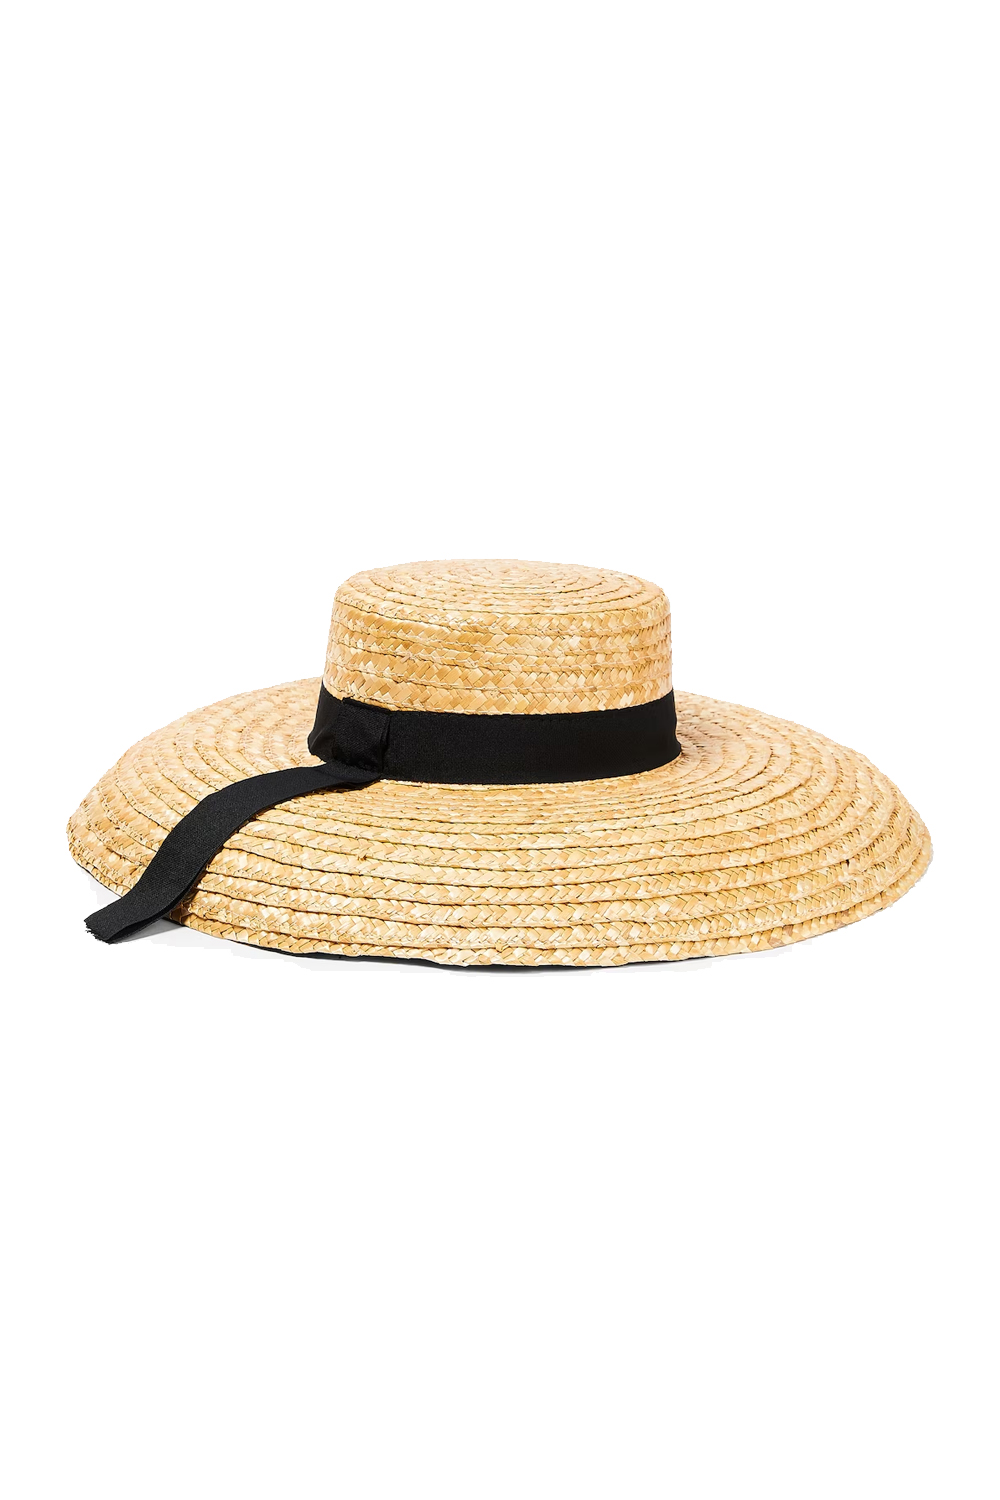 Black Straw Sun Hat for Women